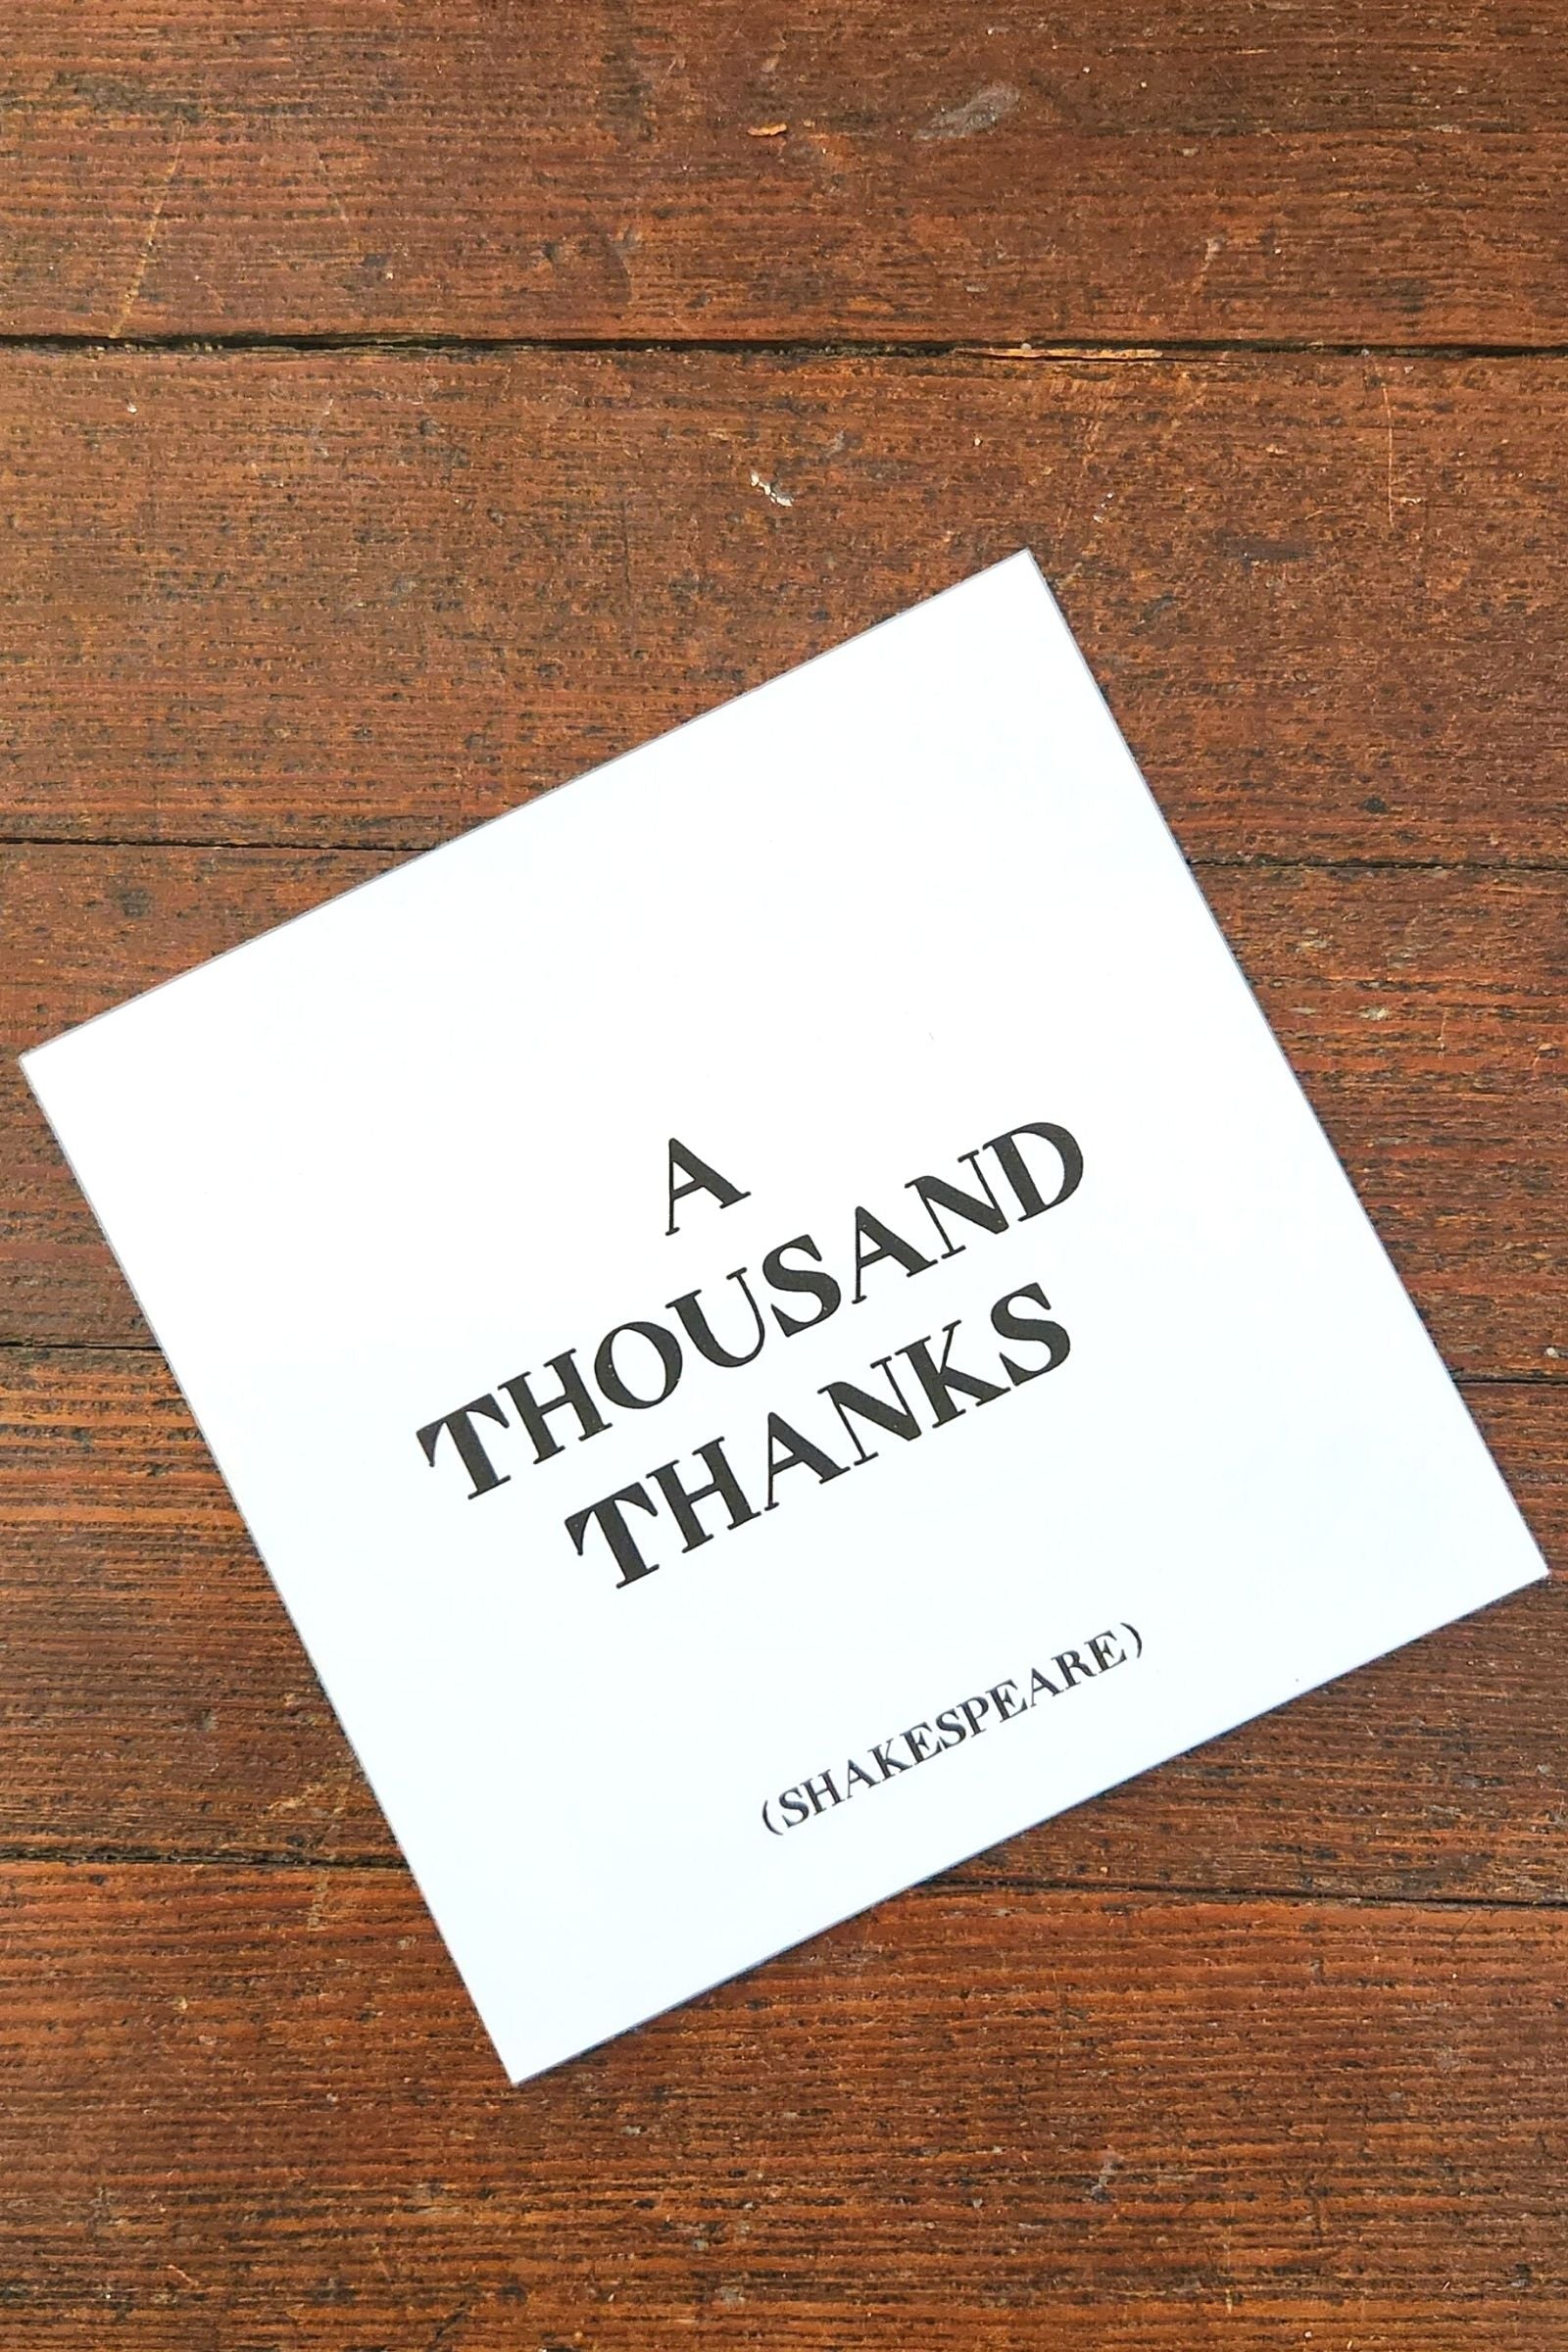 A Thousand Thanks Inspirational Card